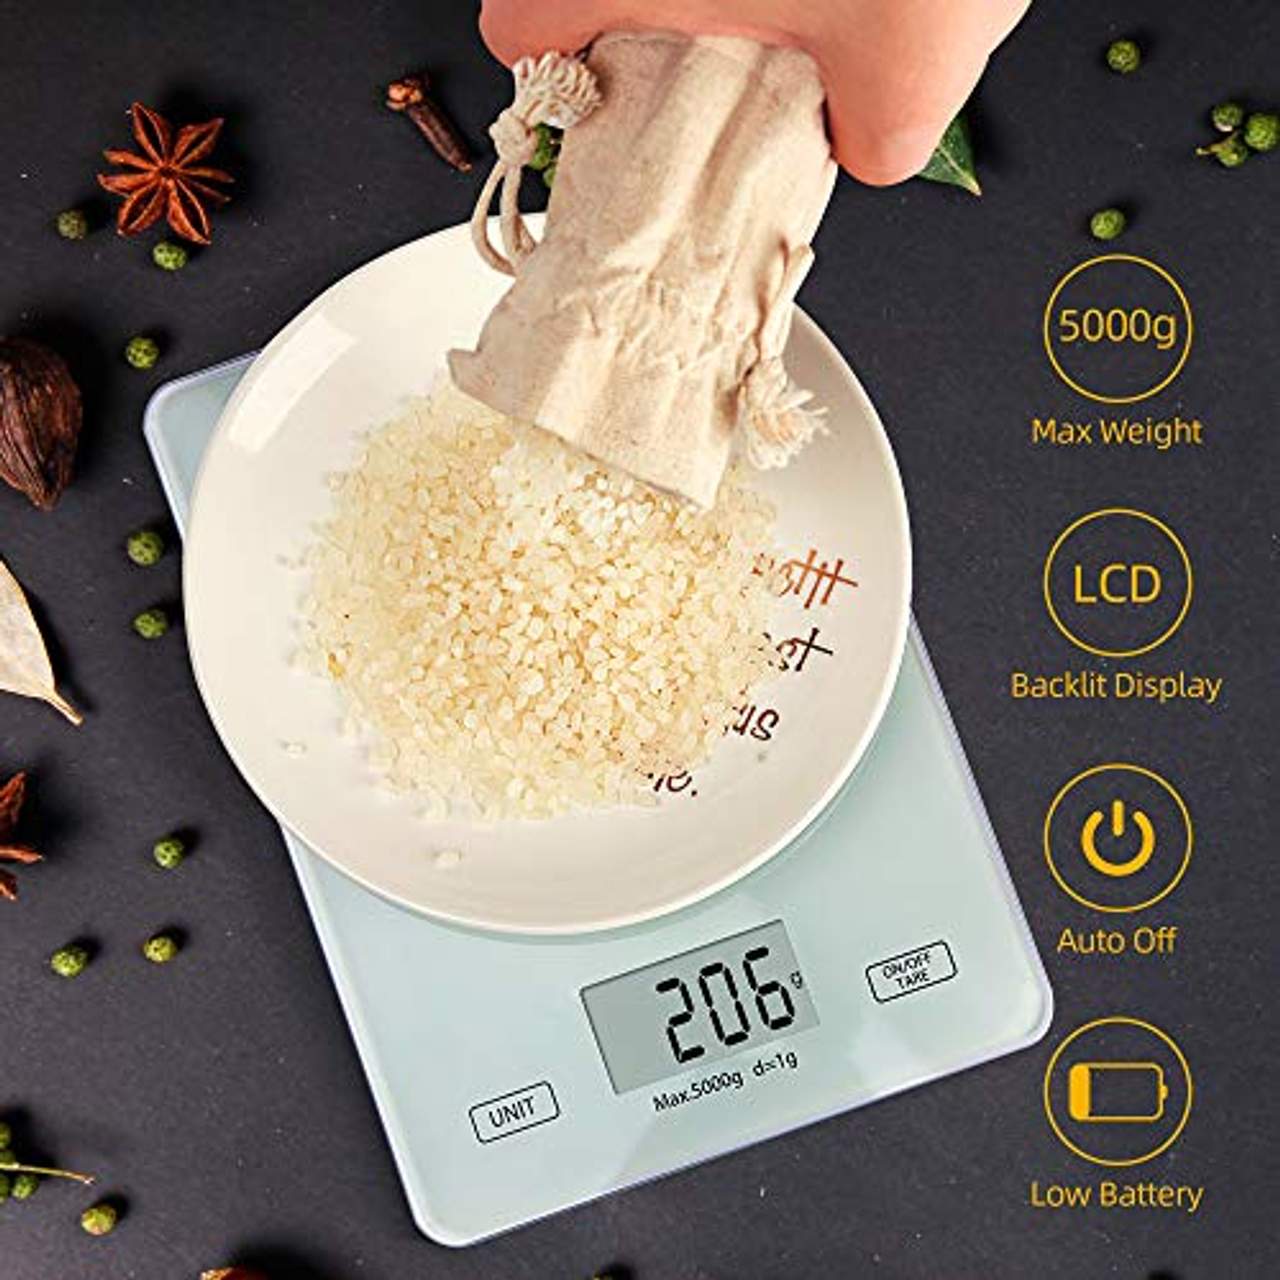 Meromore Digitale Küchenwaage 5kg